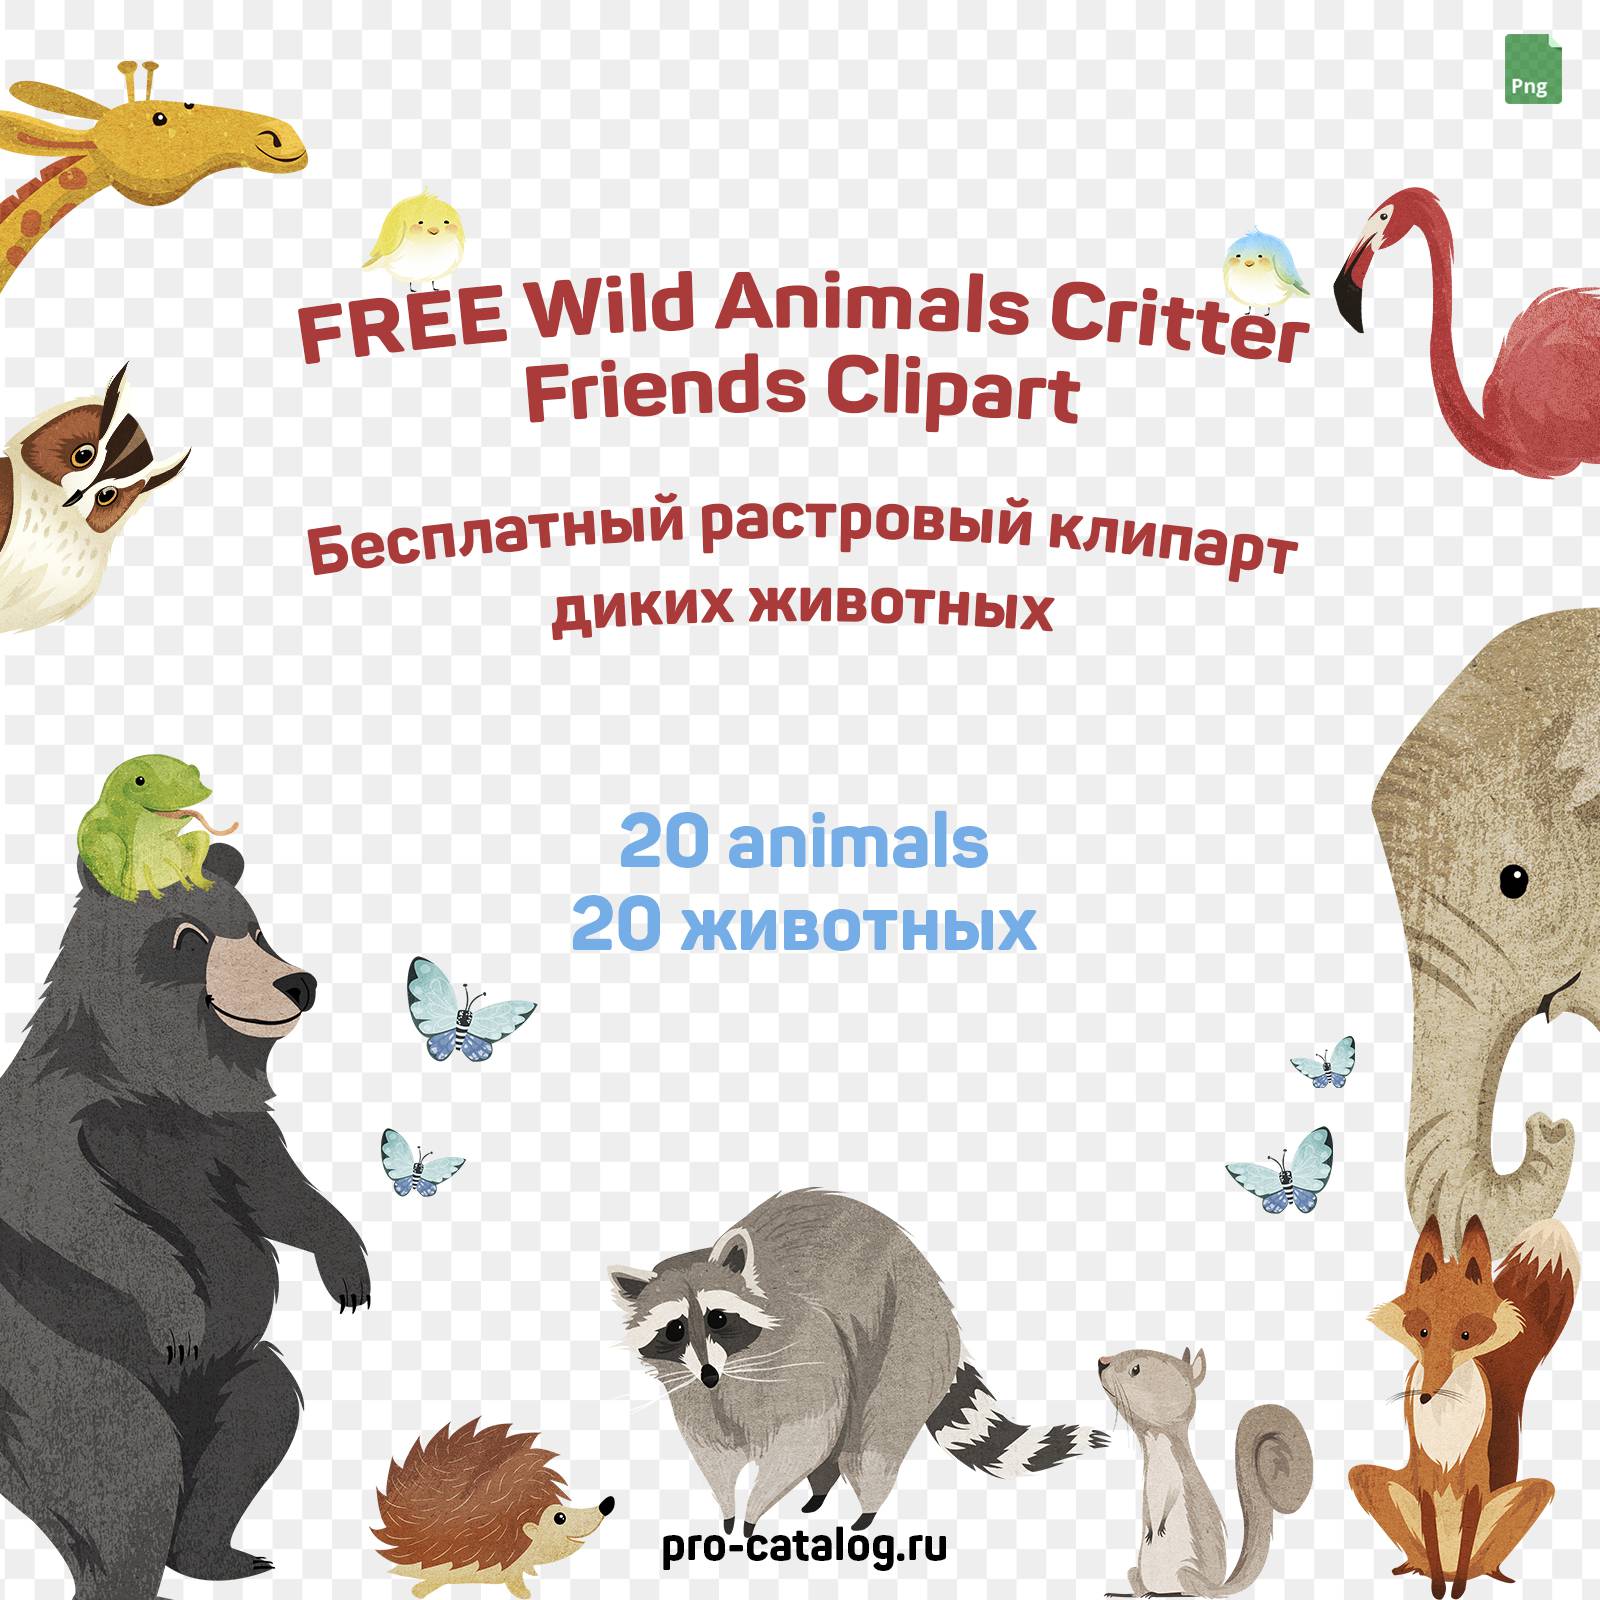 FREE Wild Animals Critter Friends Clipart